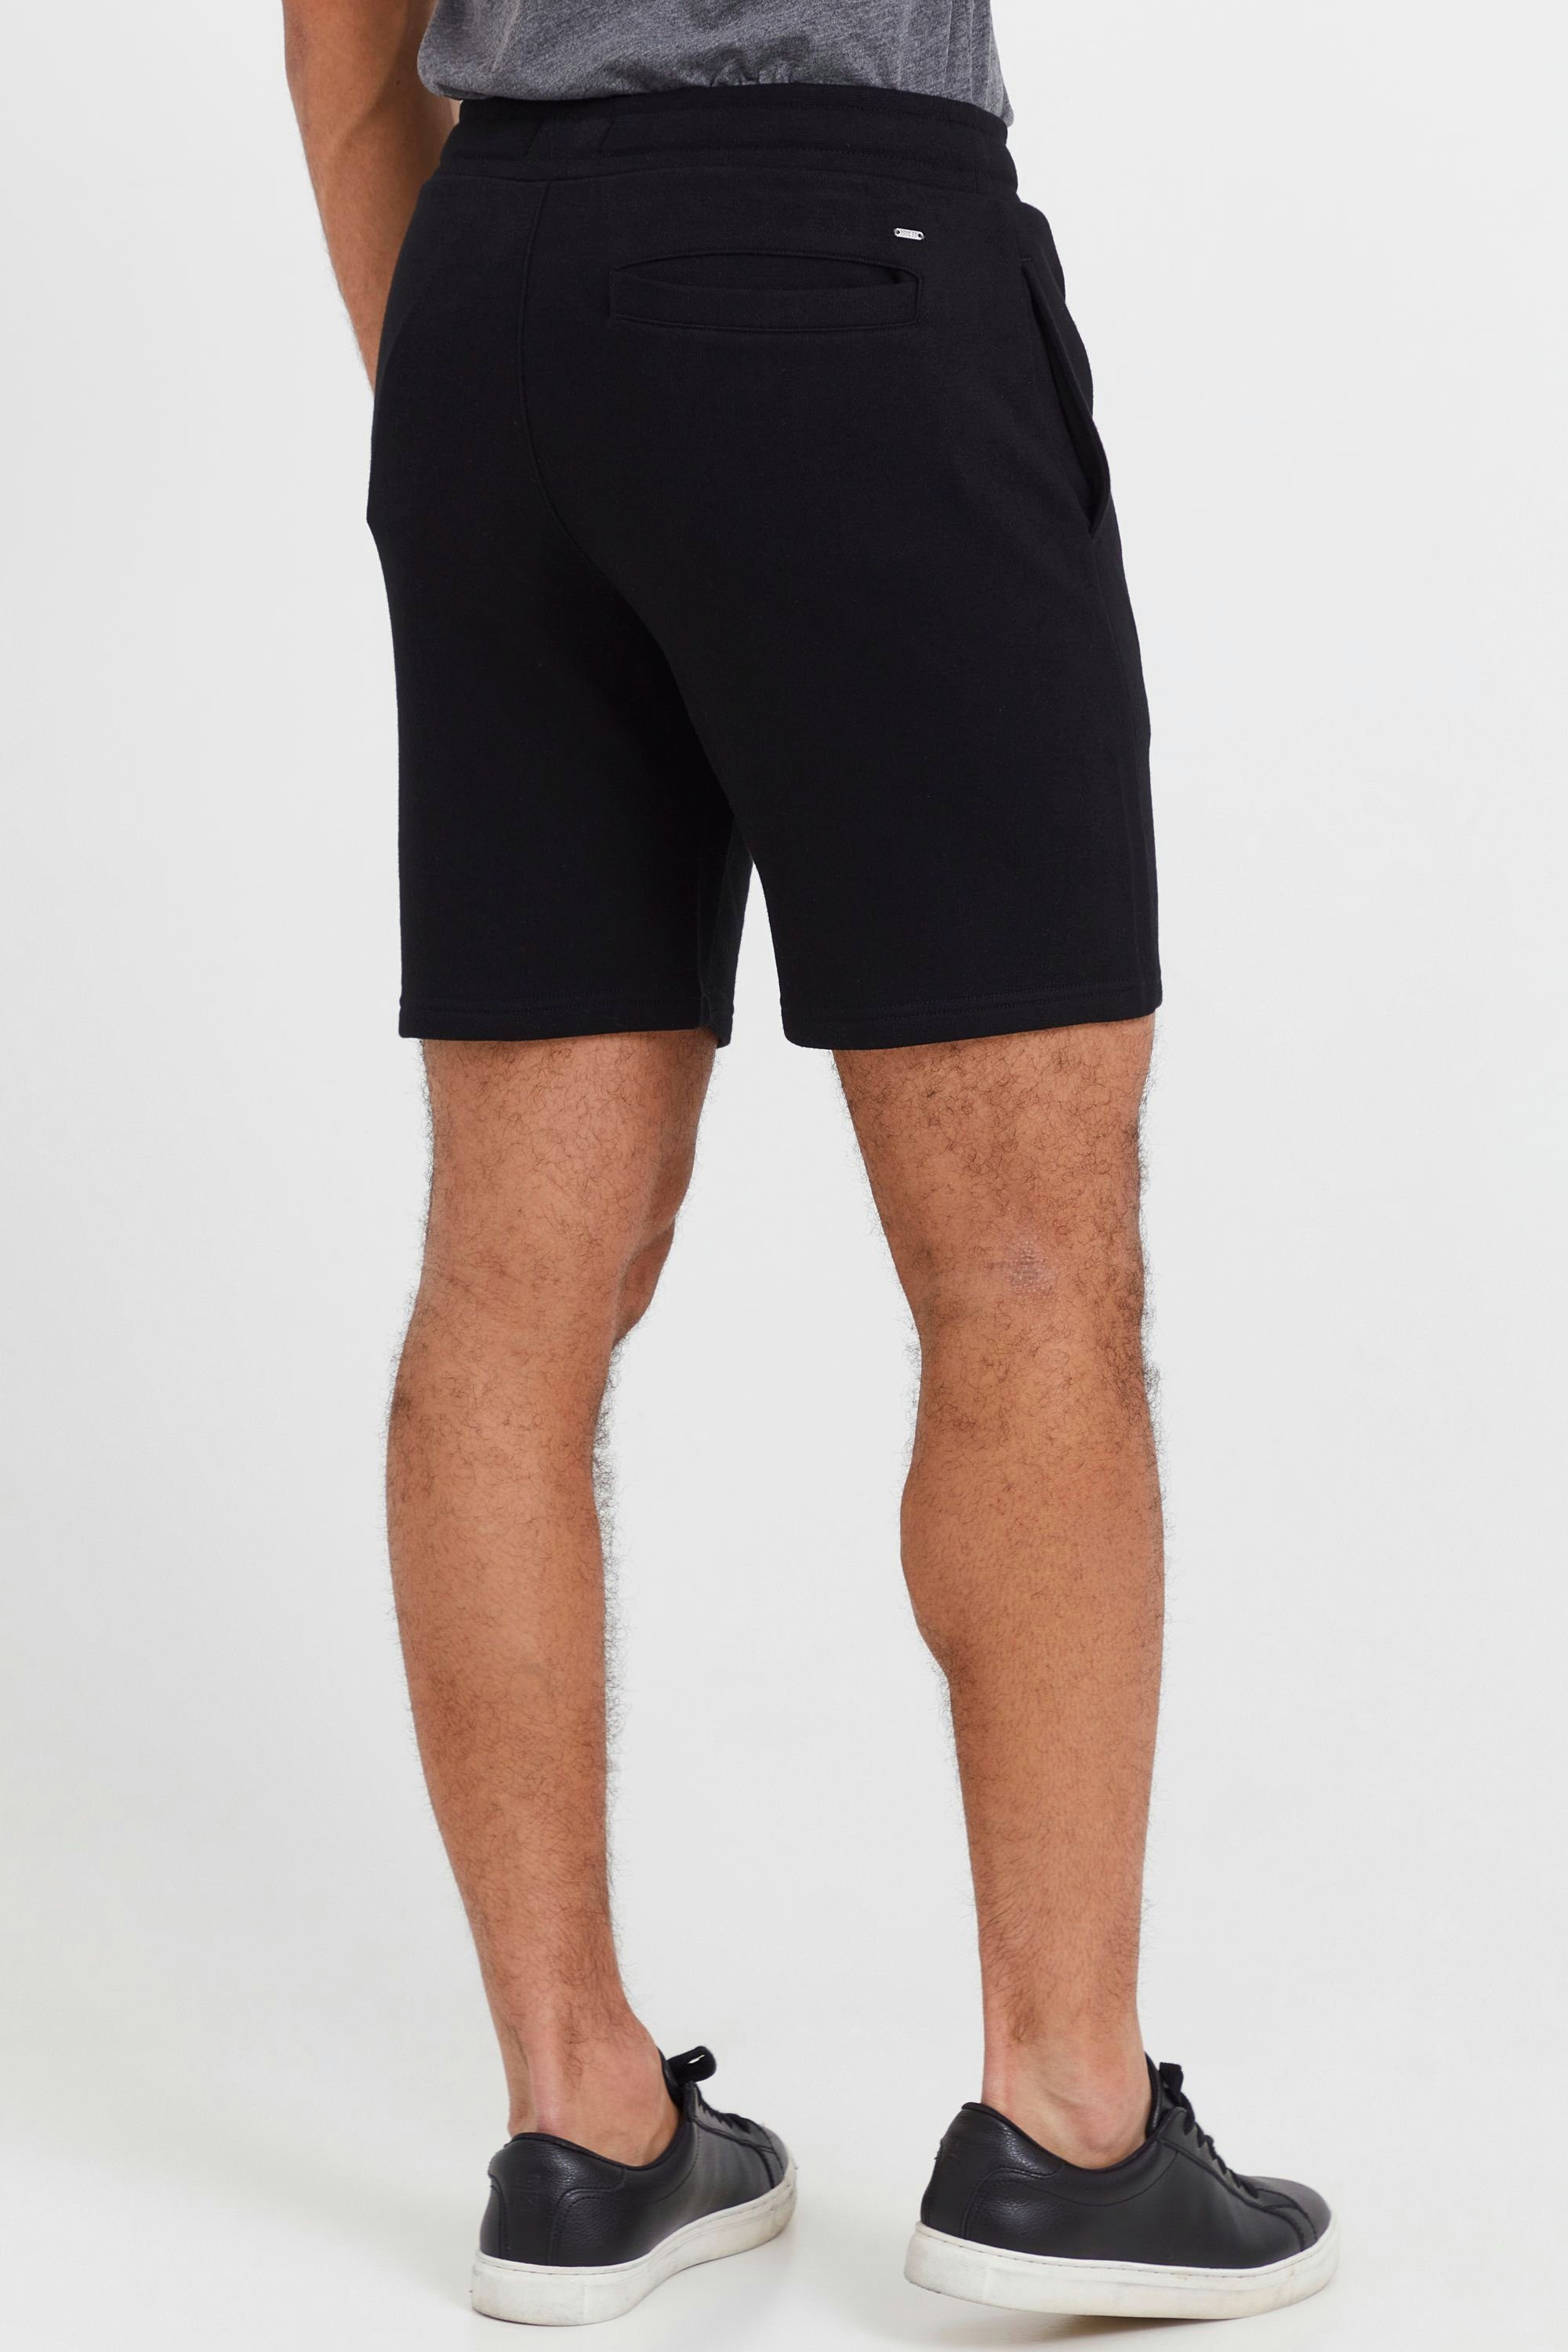 mit (194007) Basic Sweat !Solid Shorts Kordeln SDOliver Sweatshorts Black